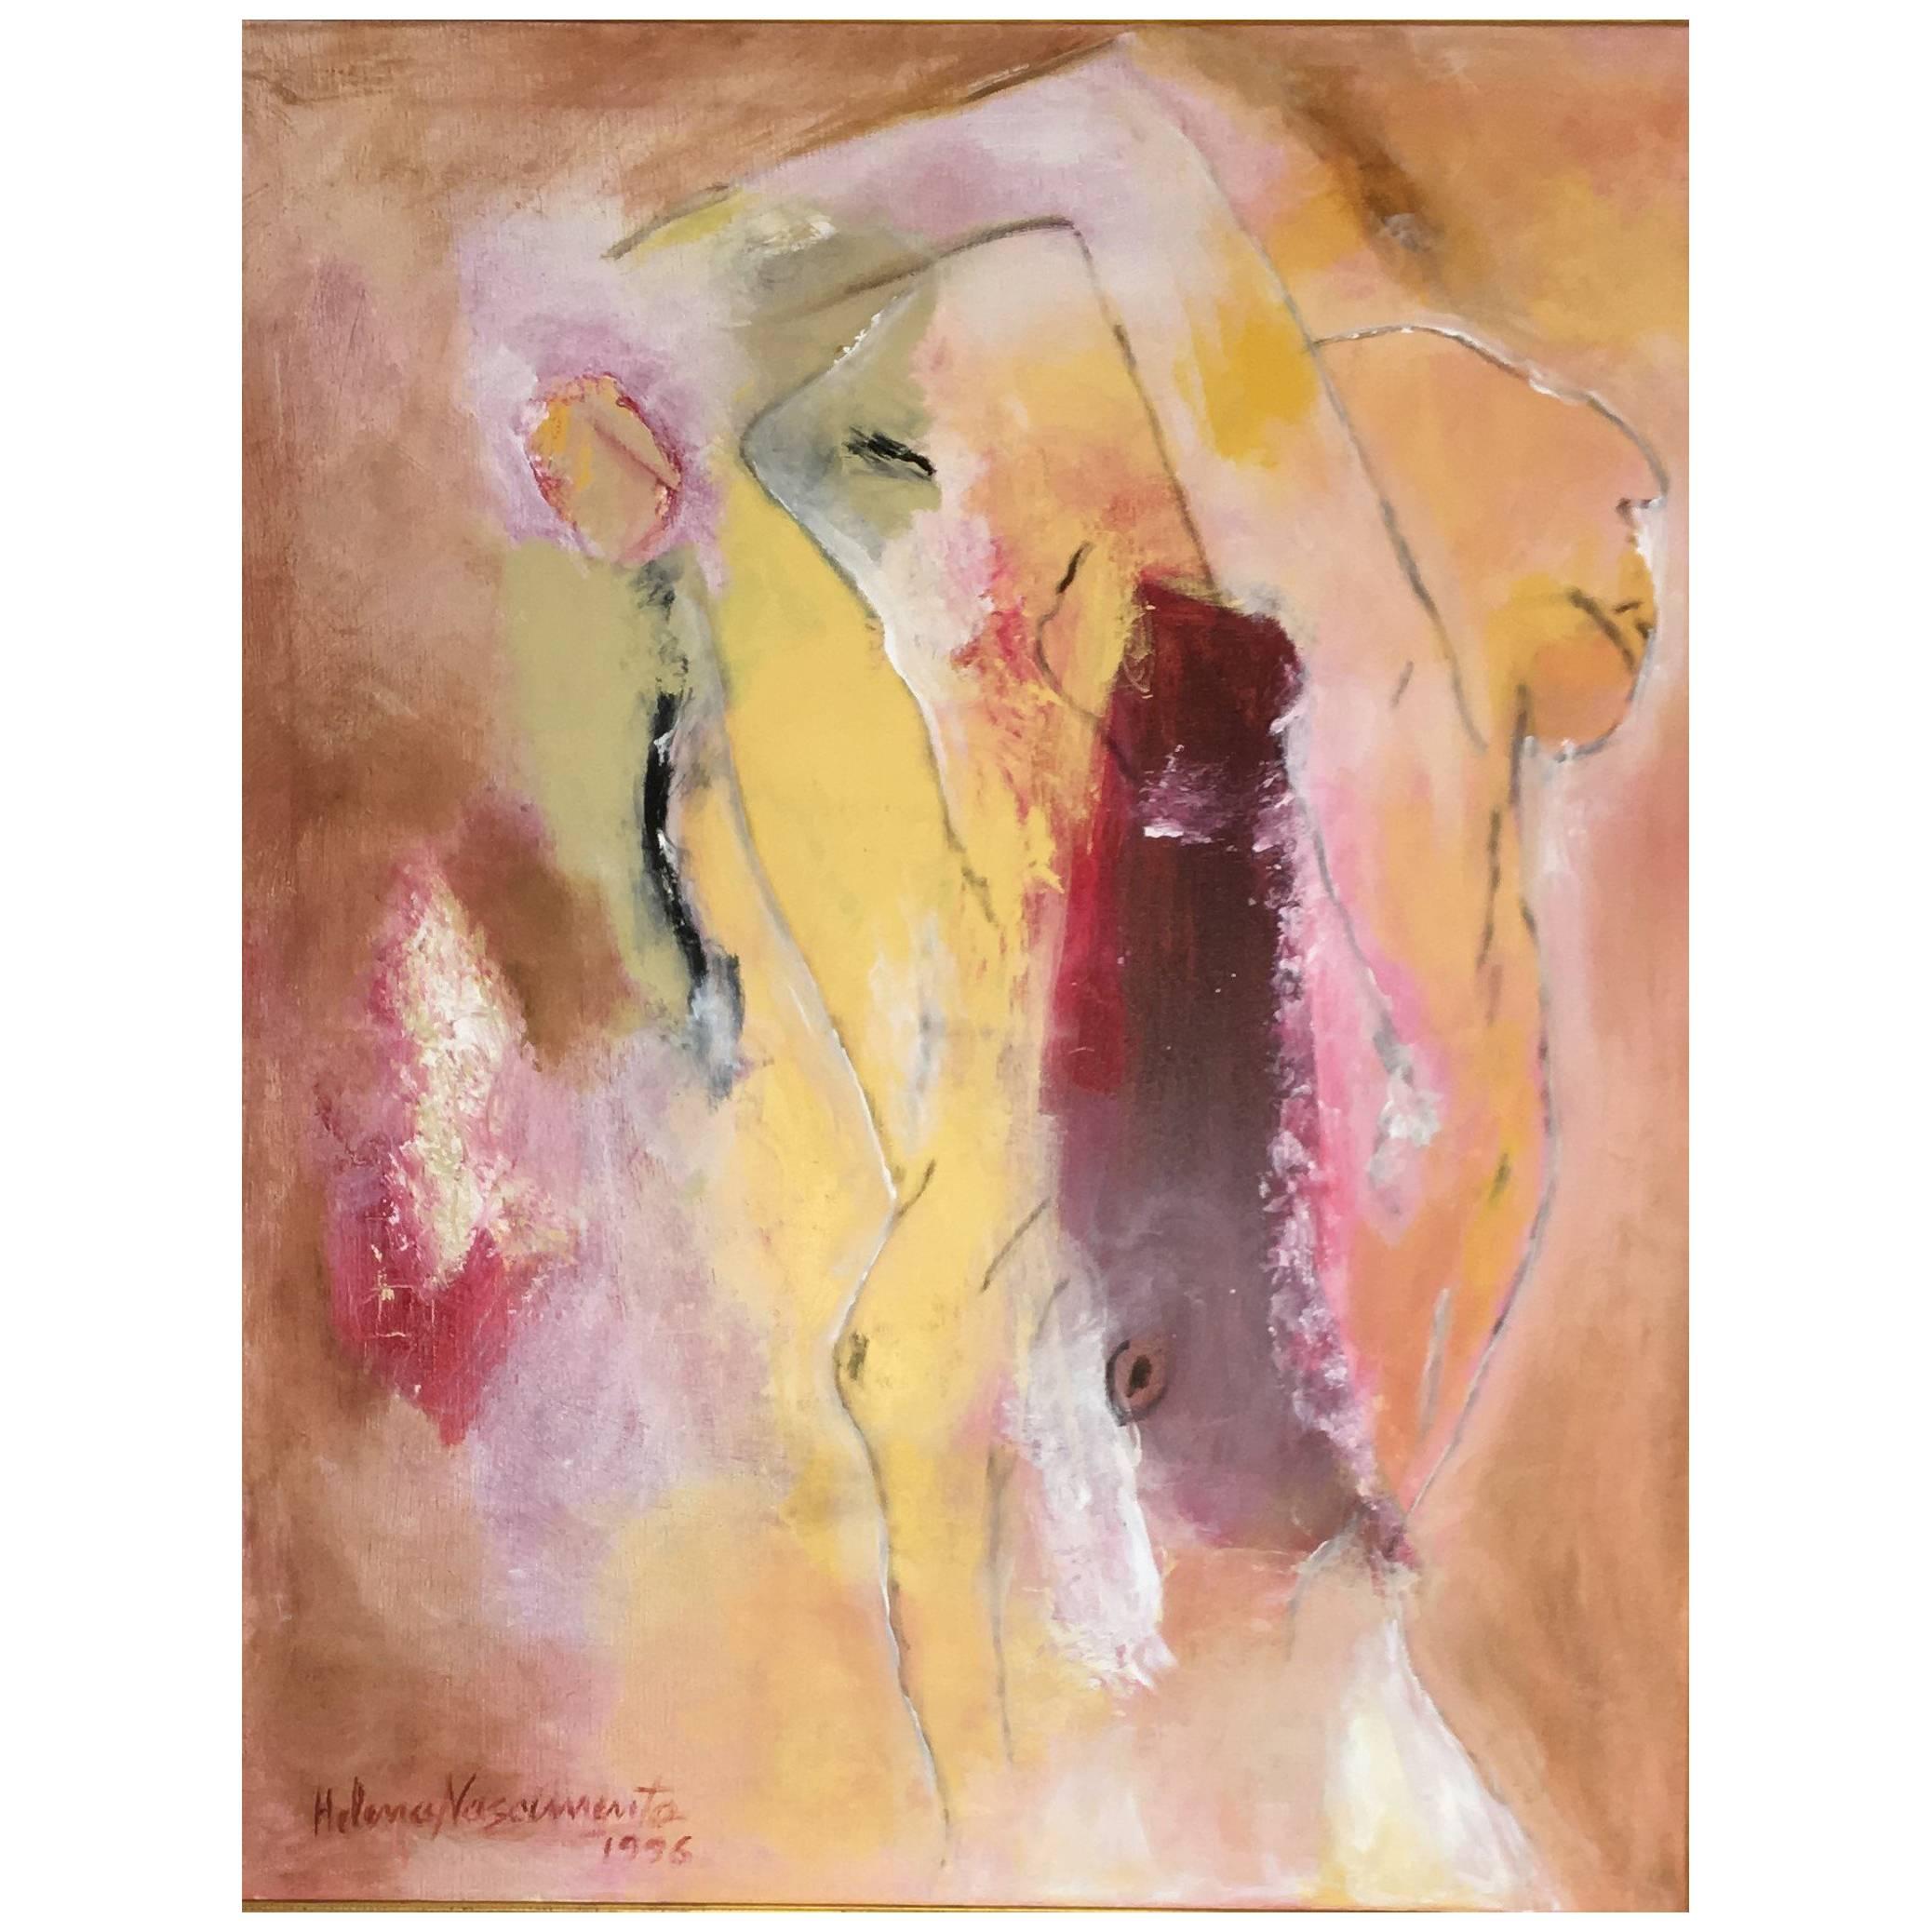 Helena Nascimento Painting "Shower" For Sale